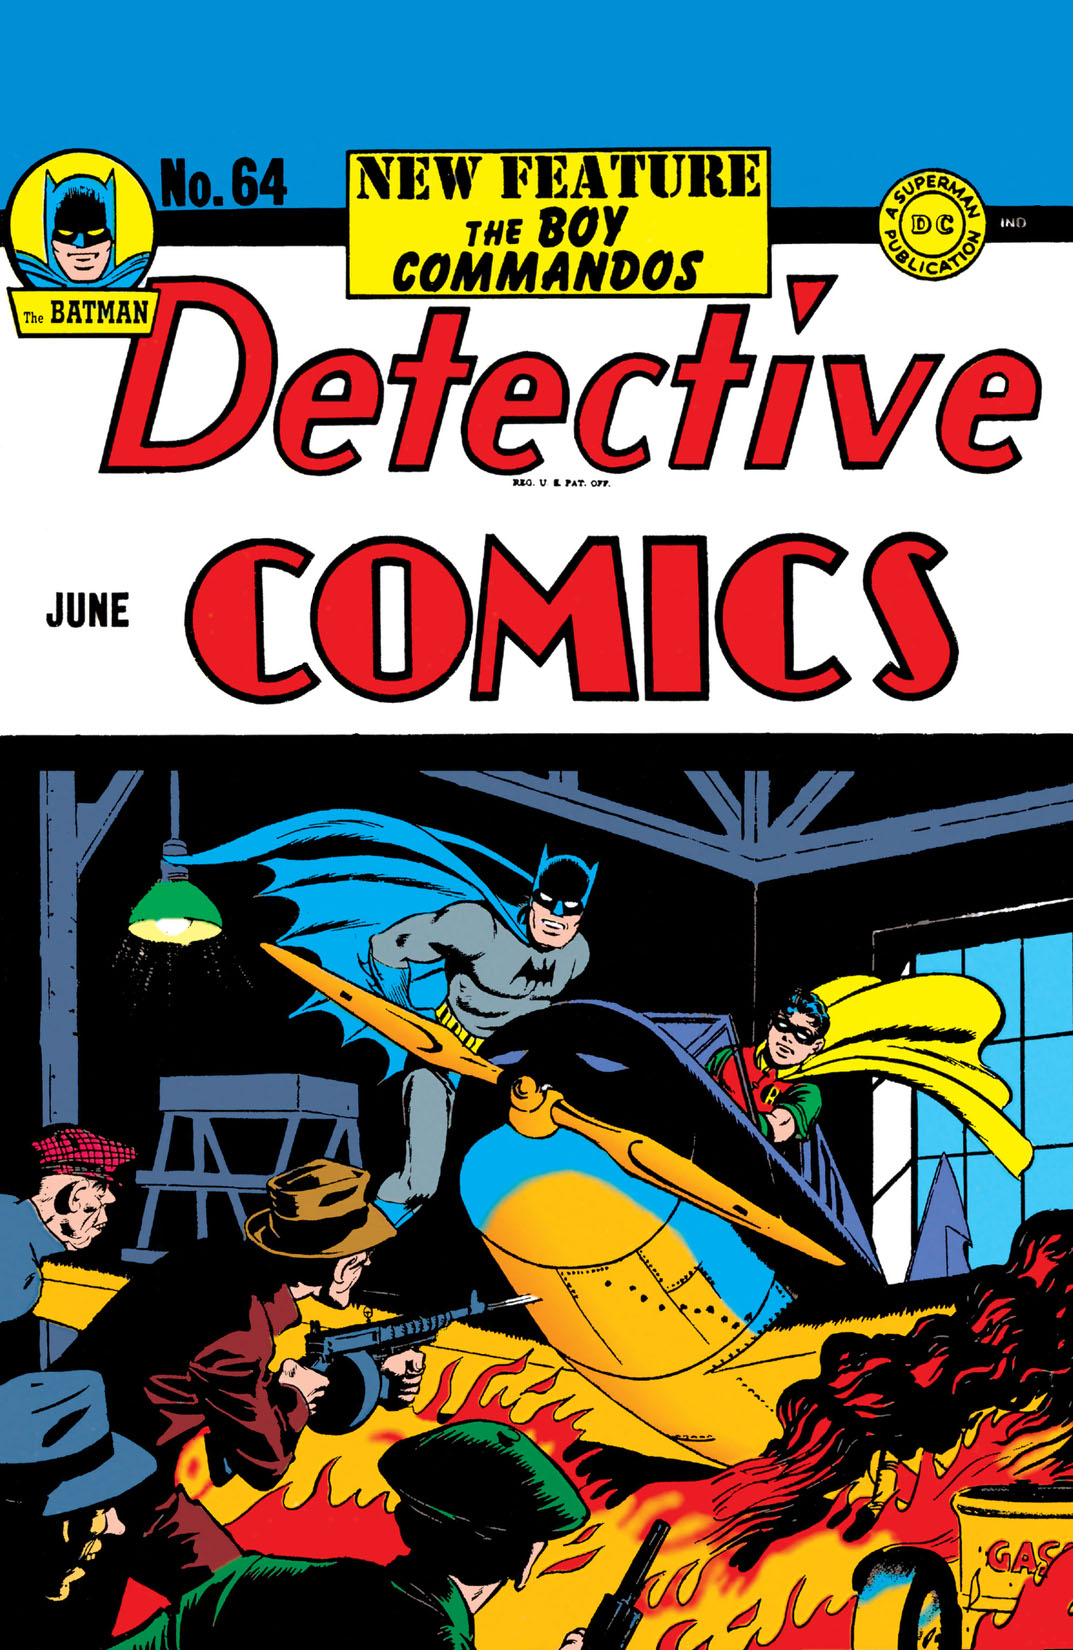 Detective Comics (1942-) #64 preview images